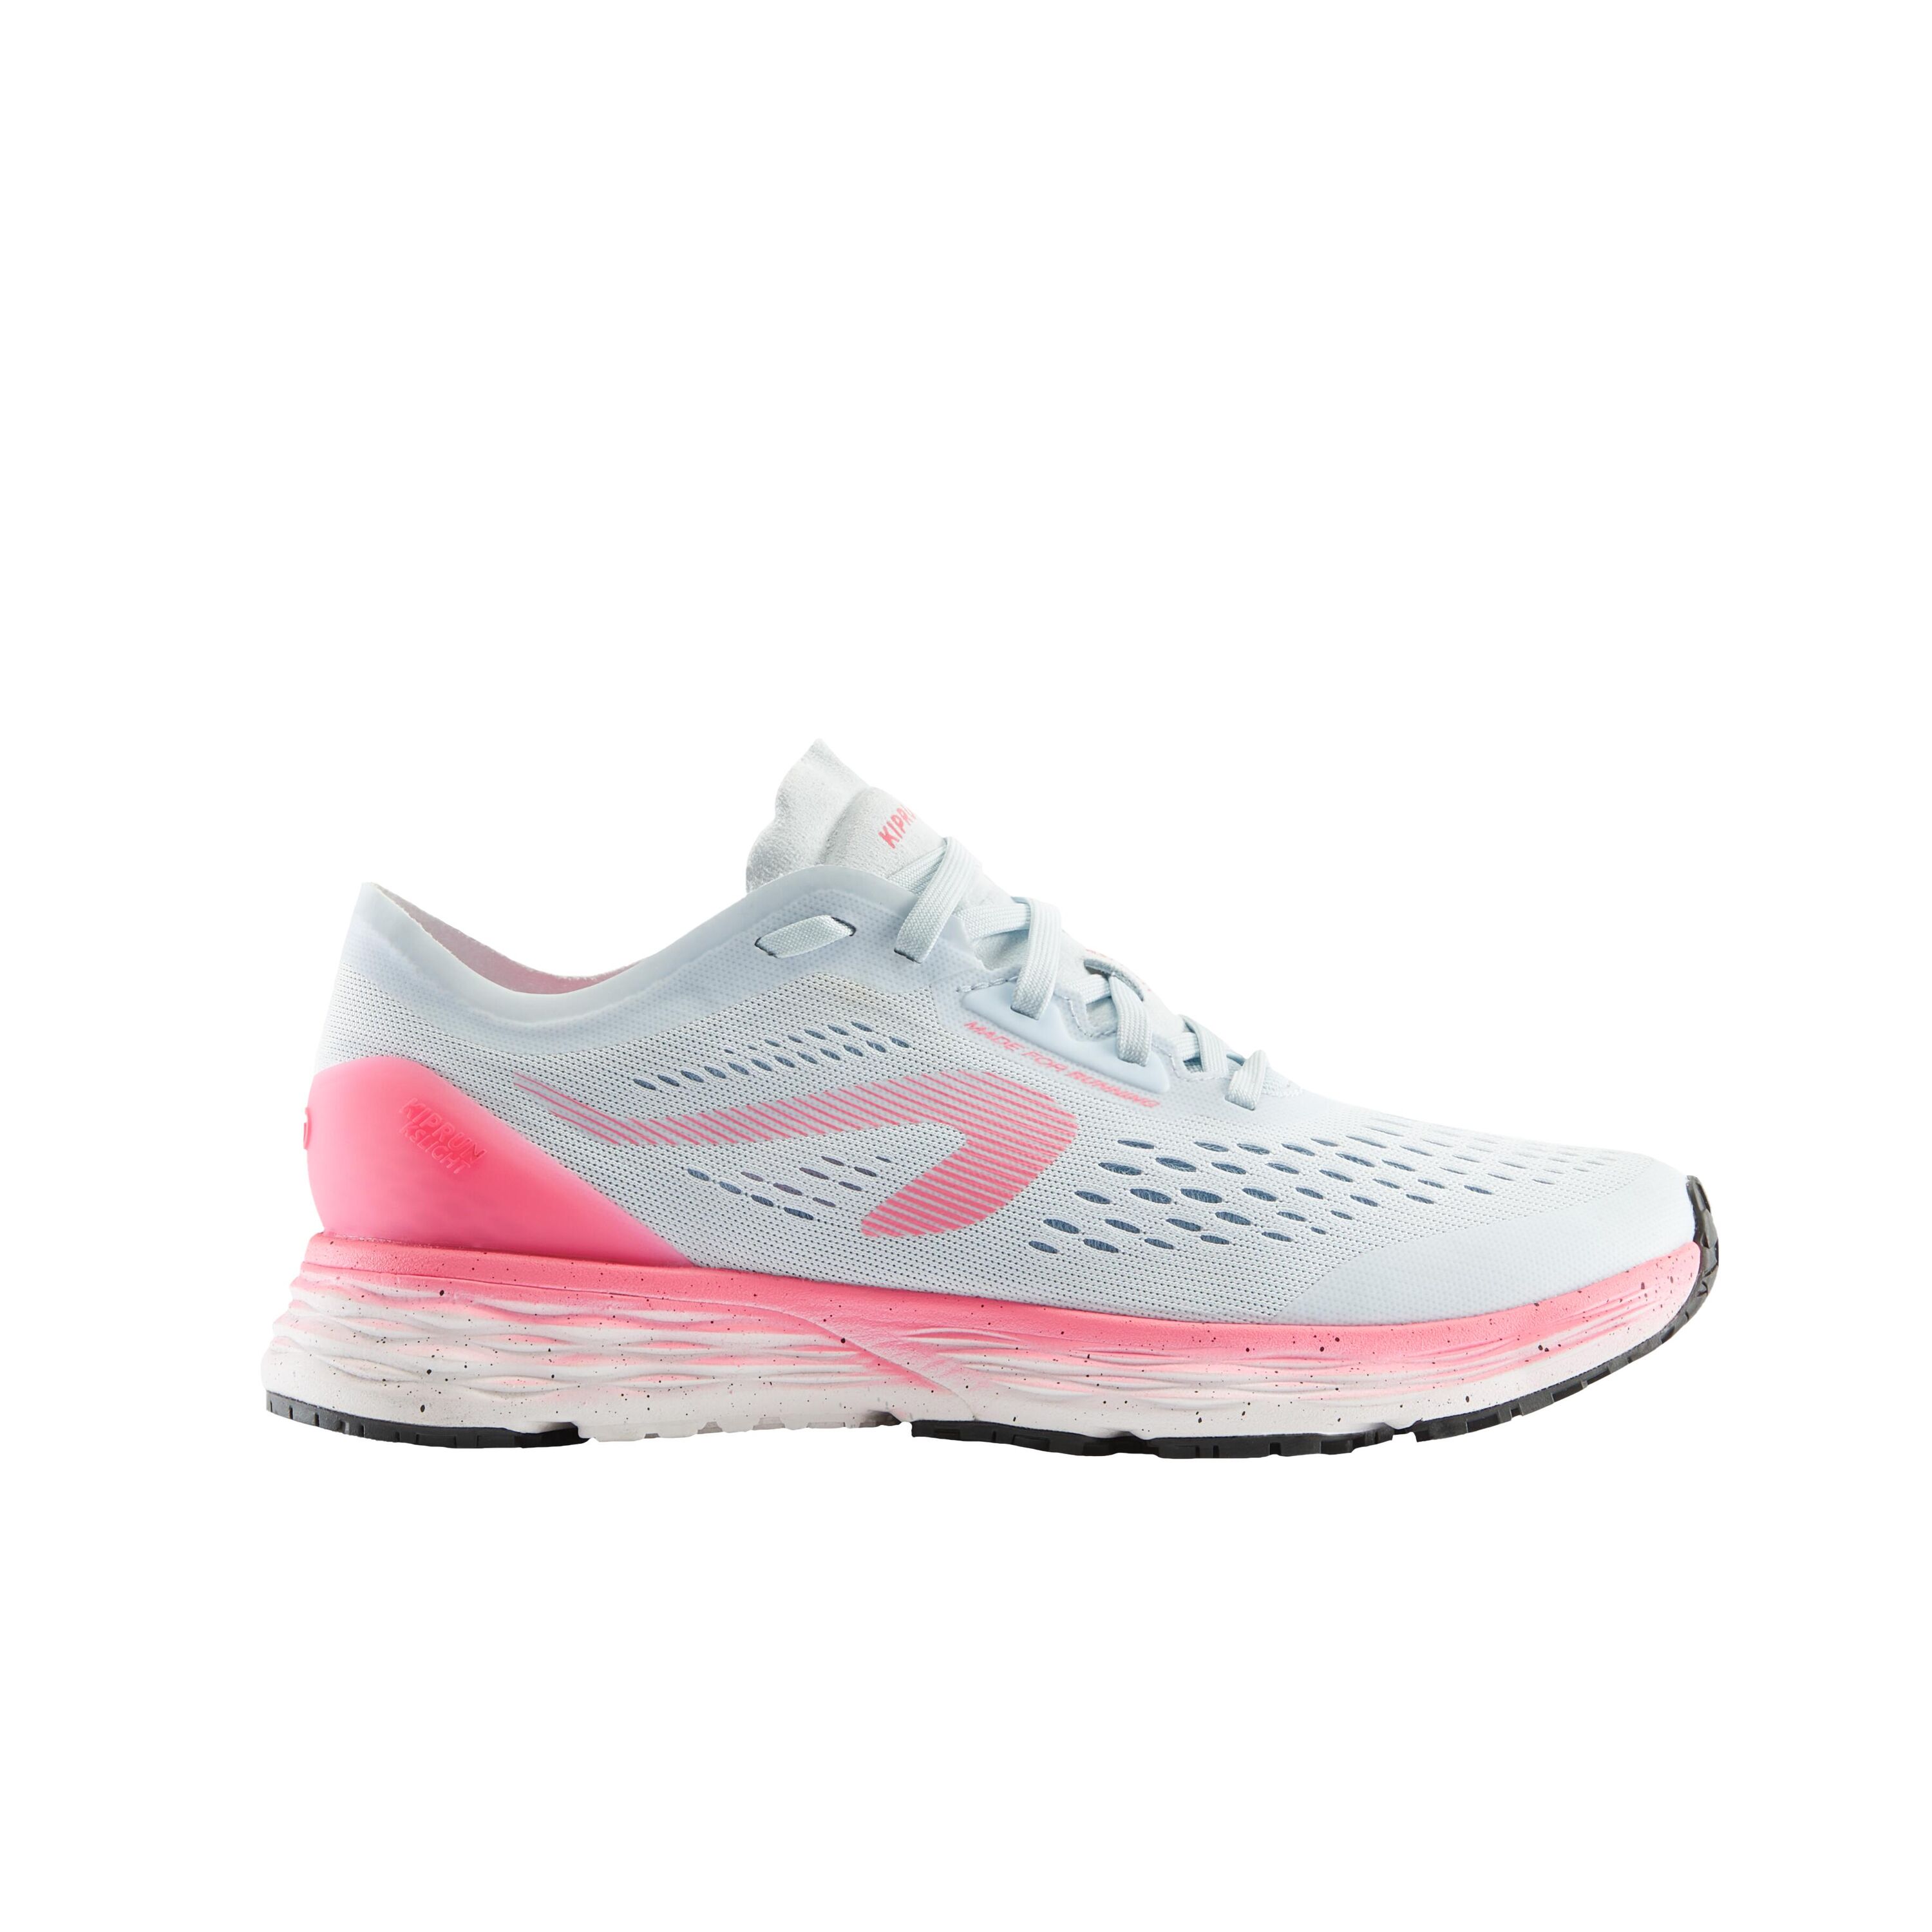 KIPRUN Women's Running Shoe Kiprun KS Light - grey light pink